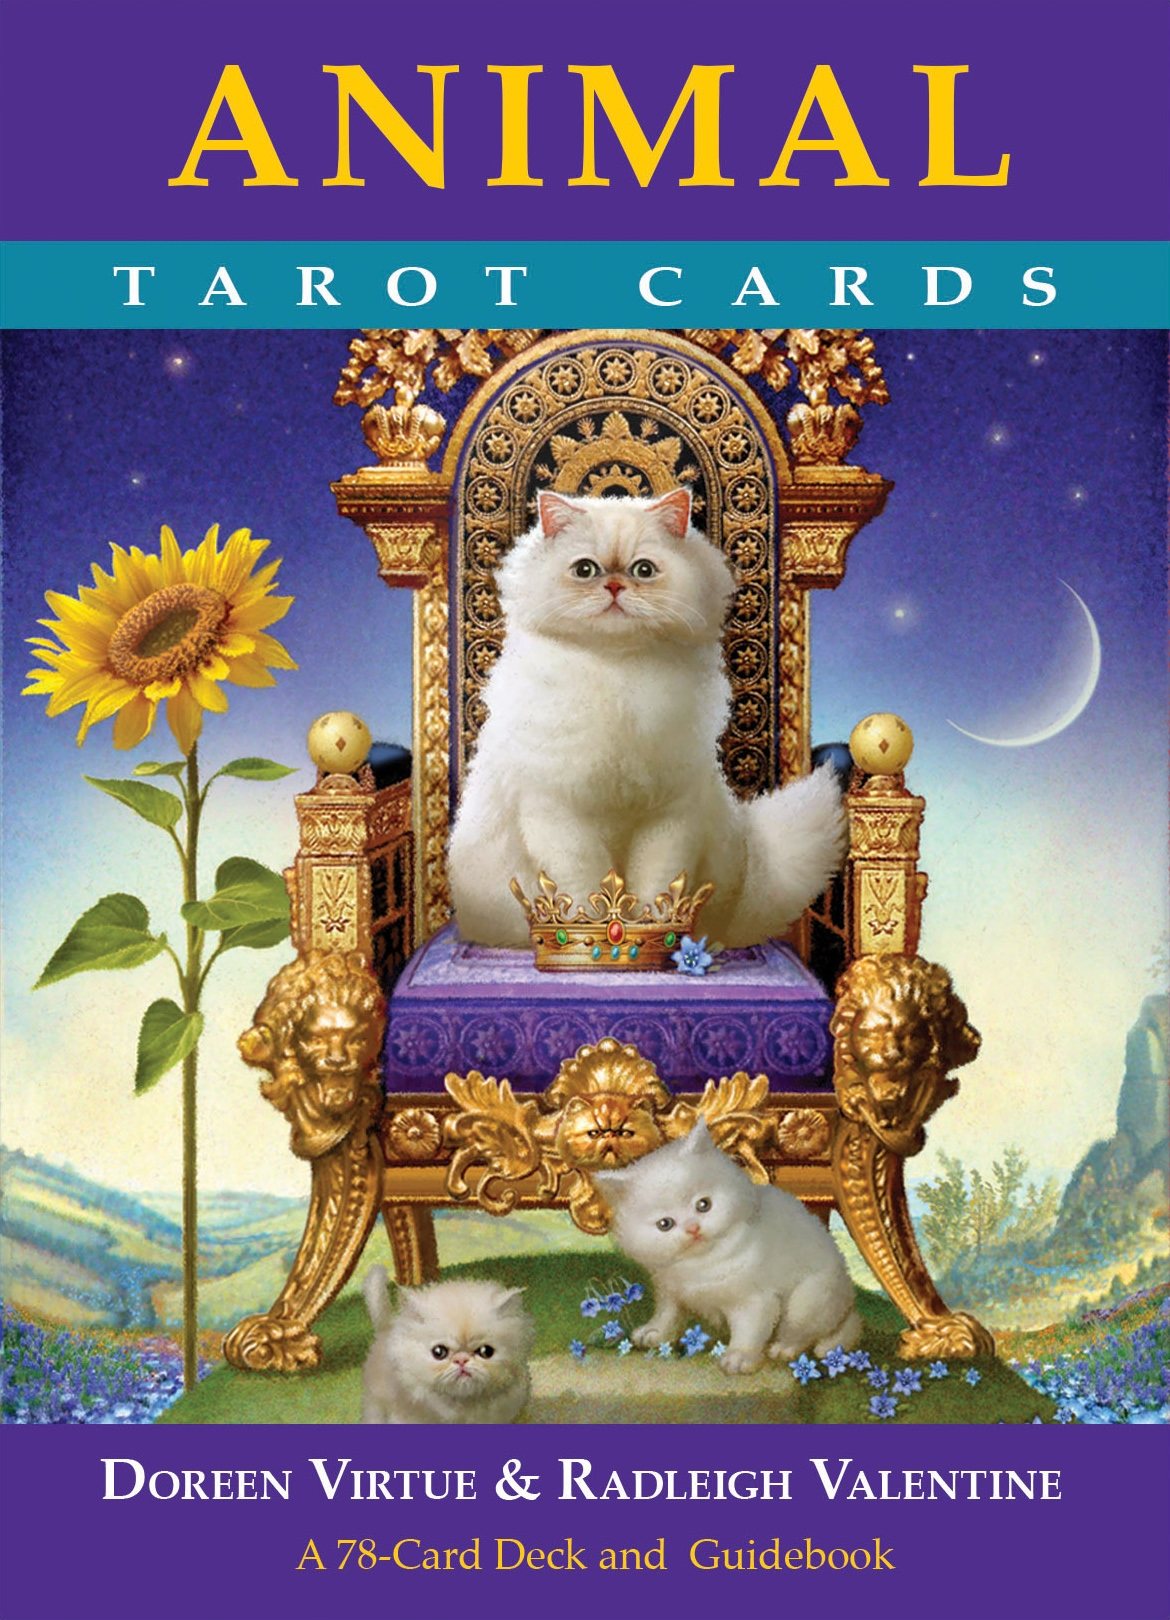 Animal Tarot Cards - Mystery Arts Online Store1170 x 1620